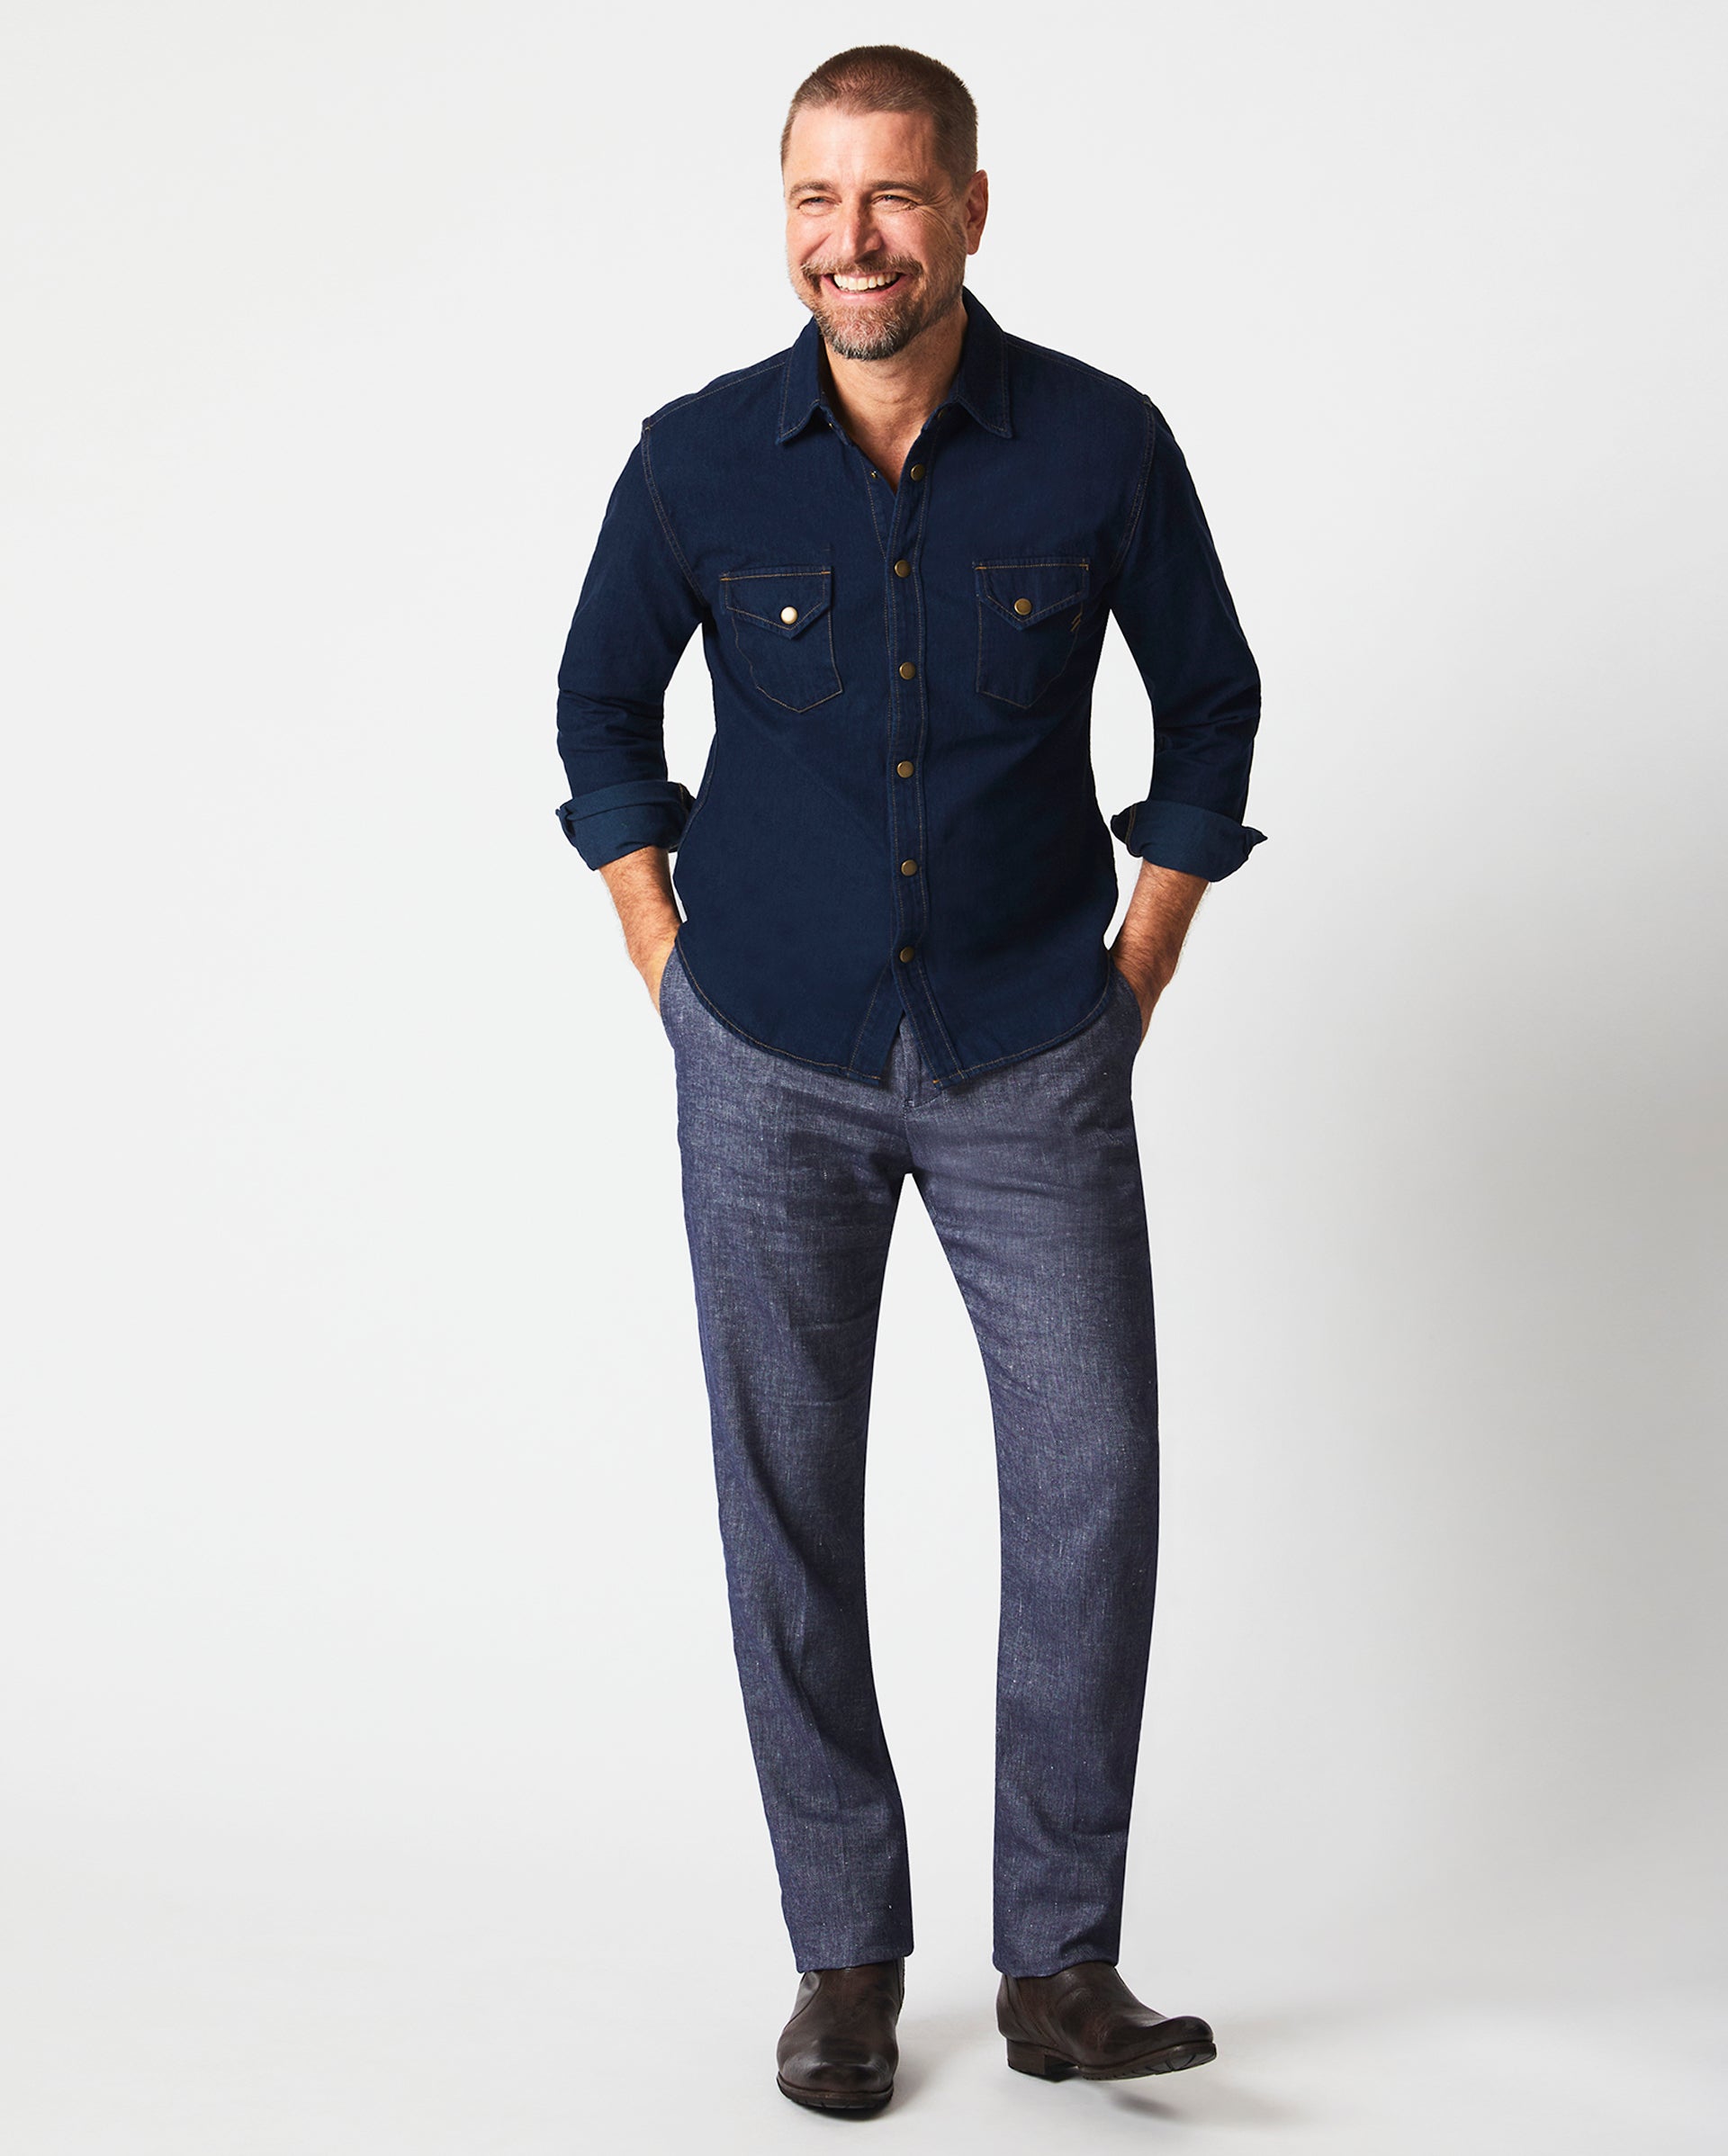 Jeans Jog Pants Shirt New Trendy Stock Photo 448085479 | Shutterstock